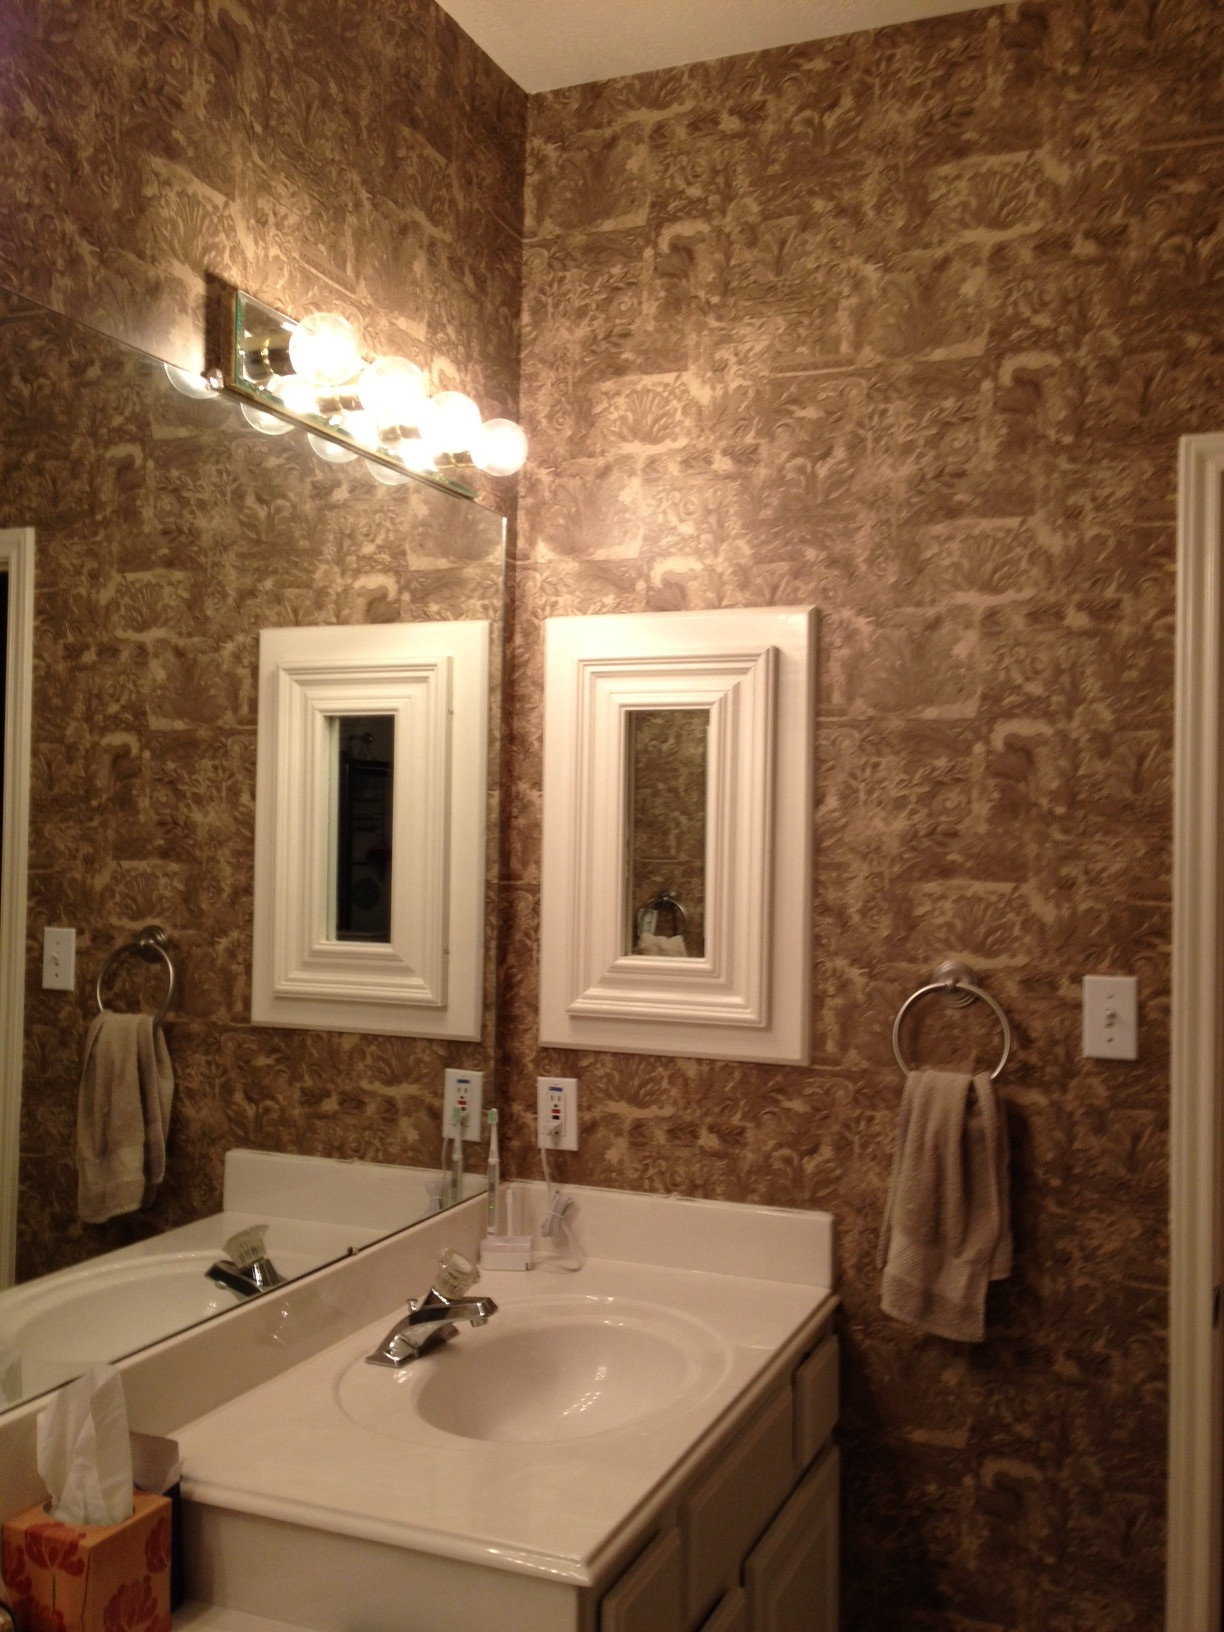 Vinyl Wallpaper For Bathroom
 Master bathroom wallpaper HELP vinyl paint sand color